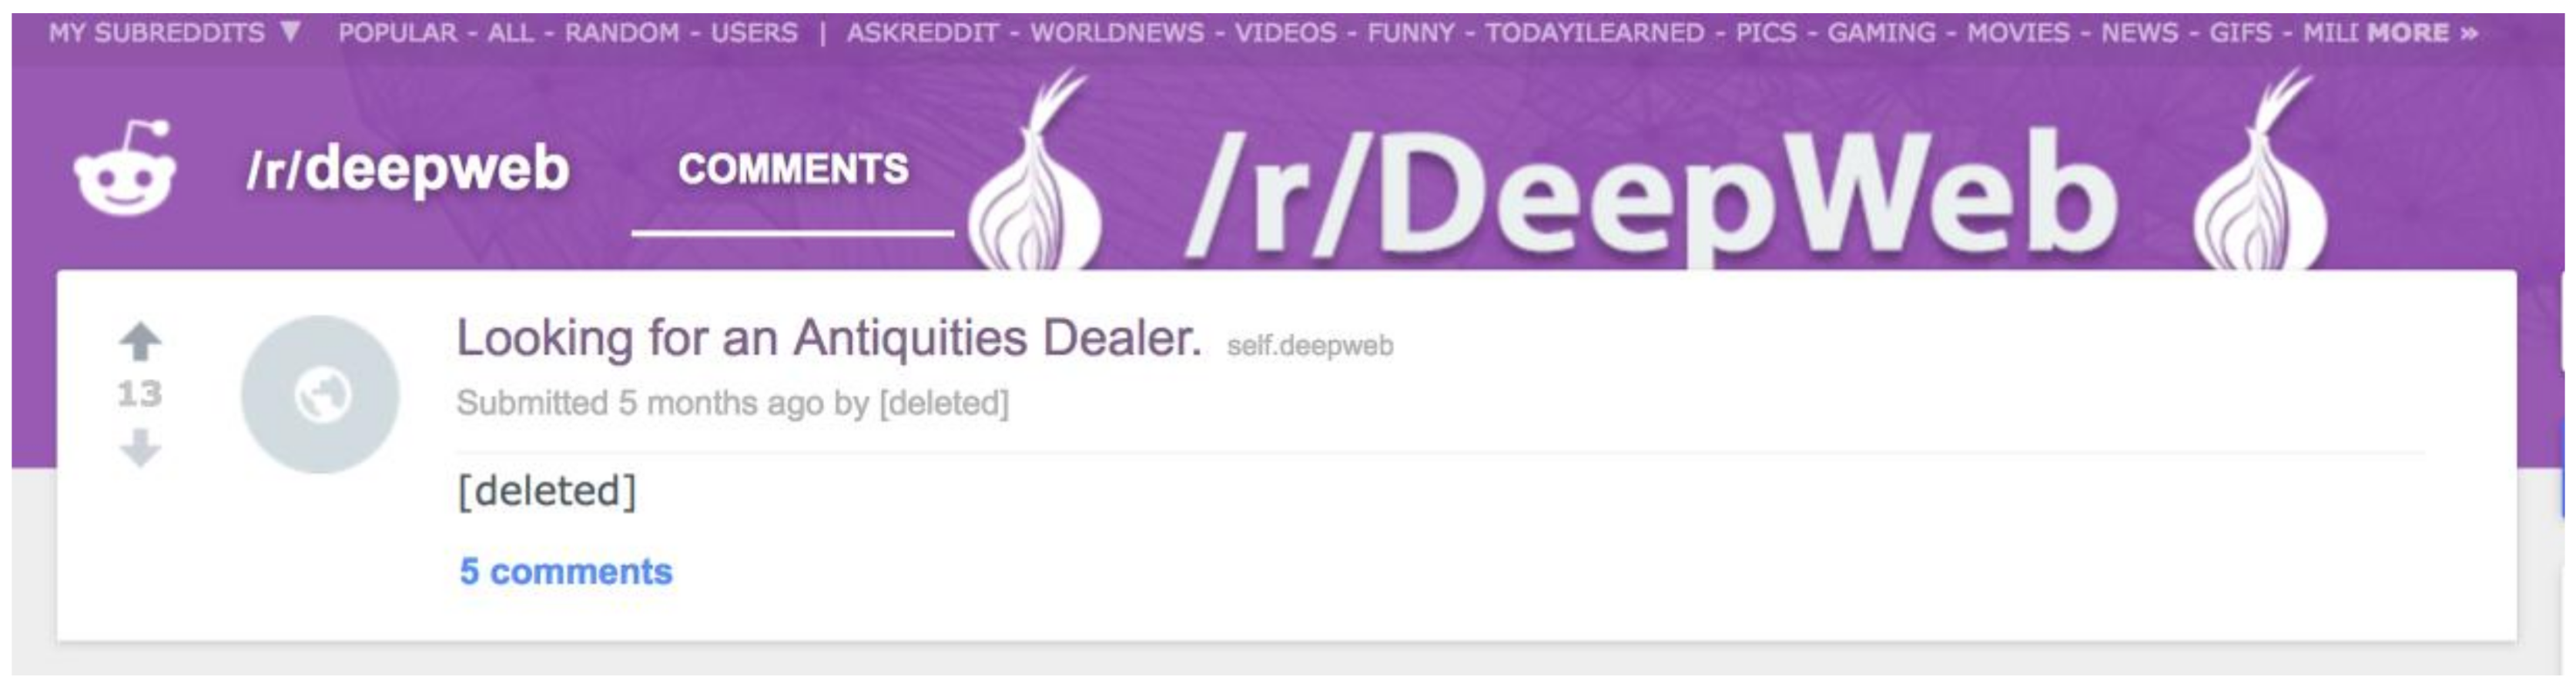 New Darknet Market Reddit